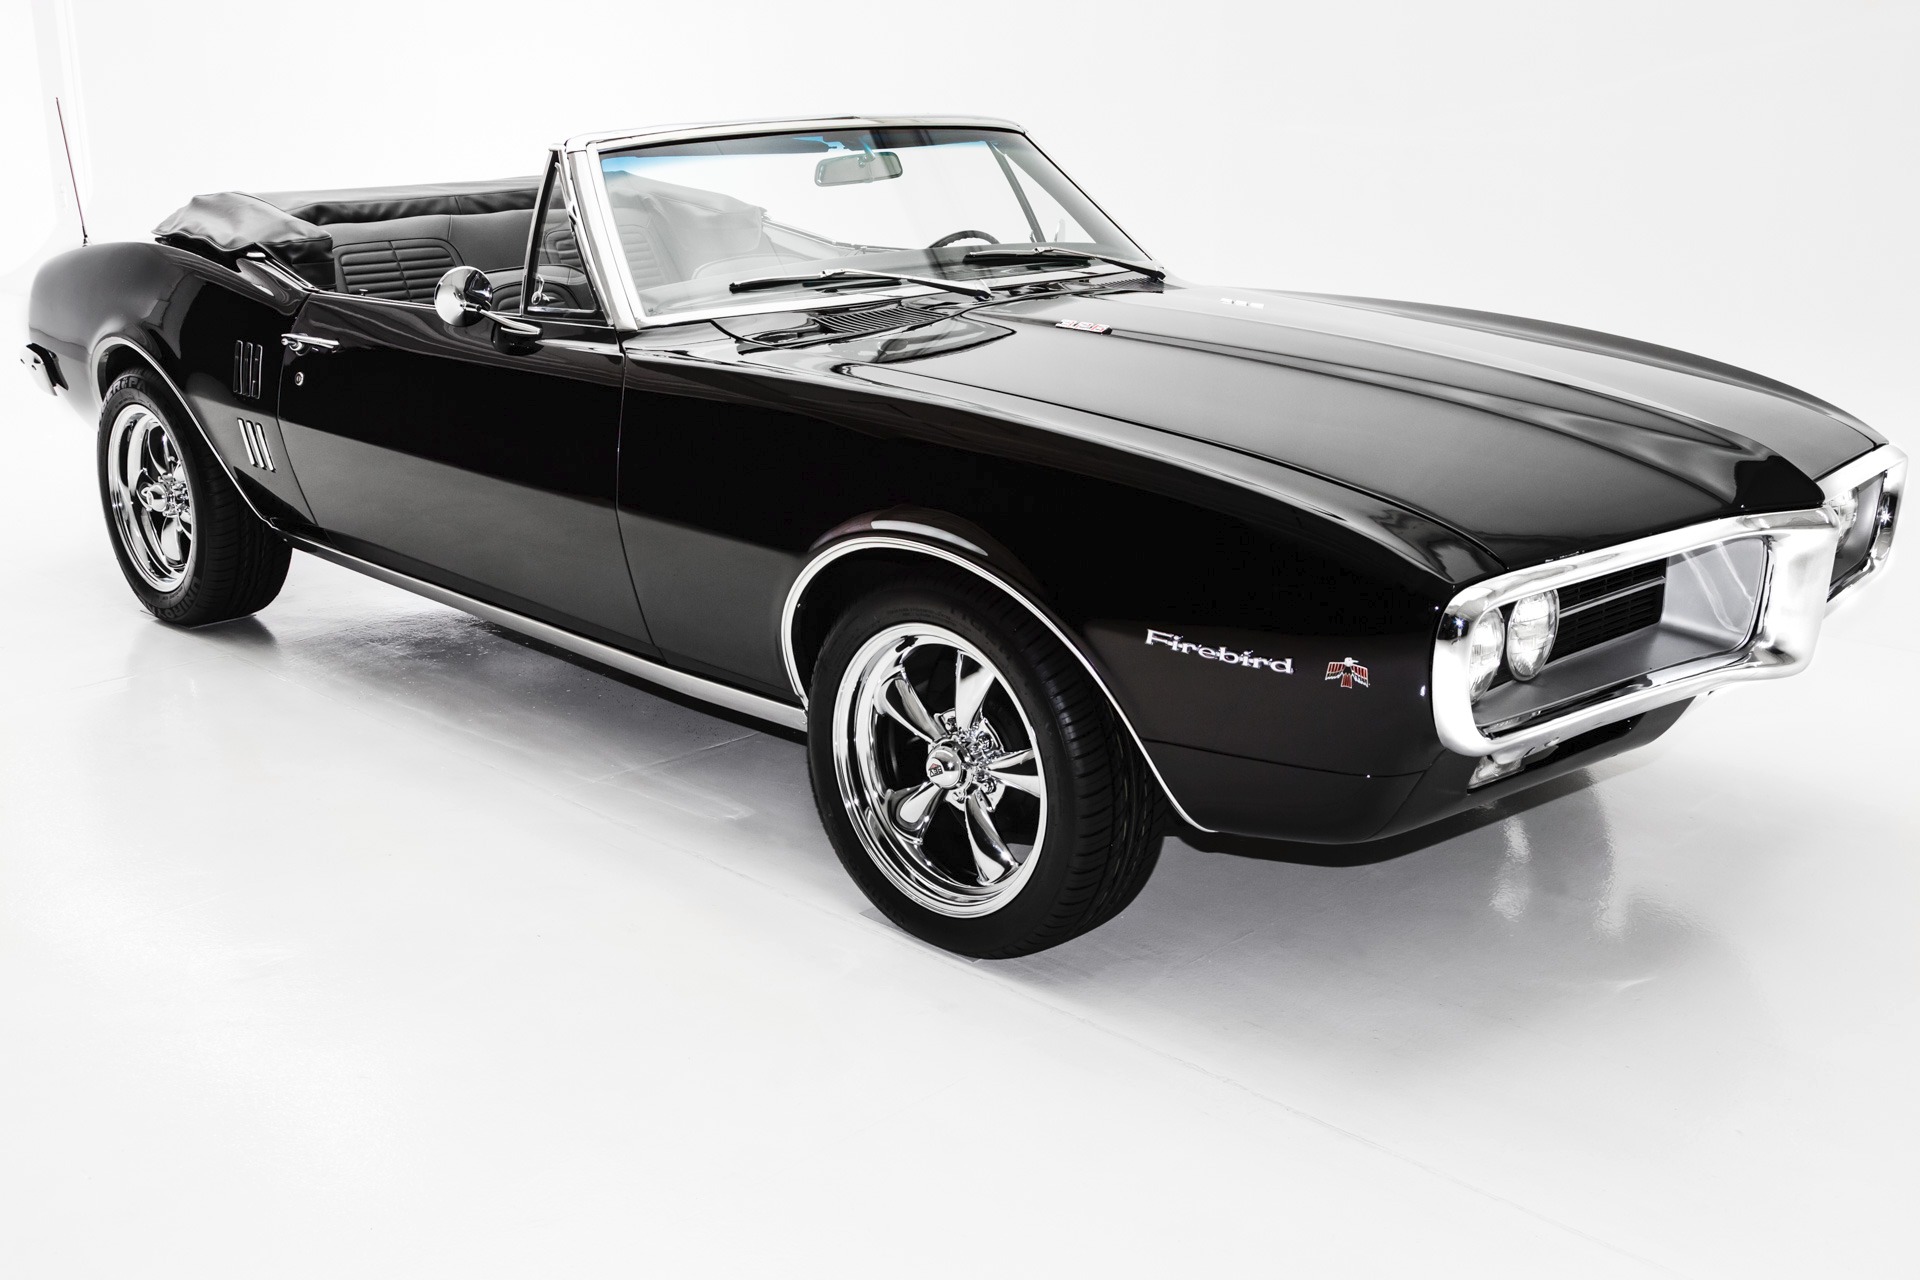 For Sale Used 1967 Pontiac Firebird Convertible Triple Black | American Dream Machines Des Moines IA 50309